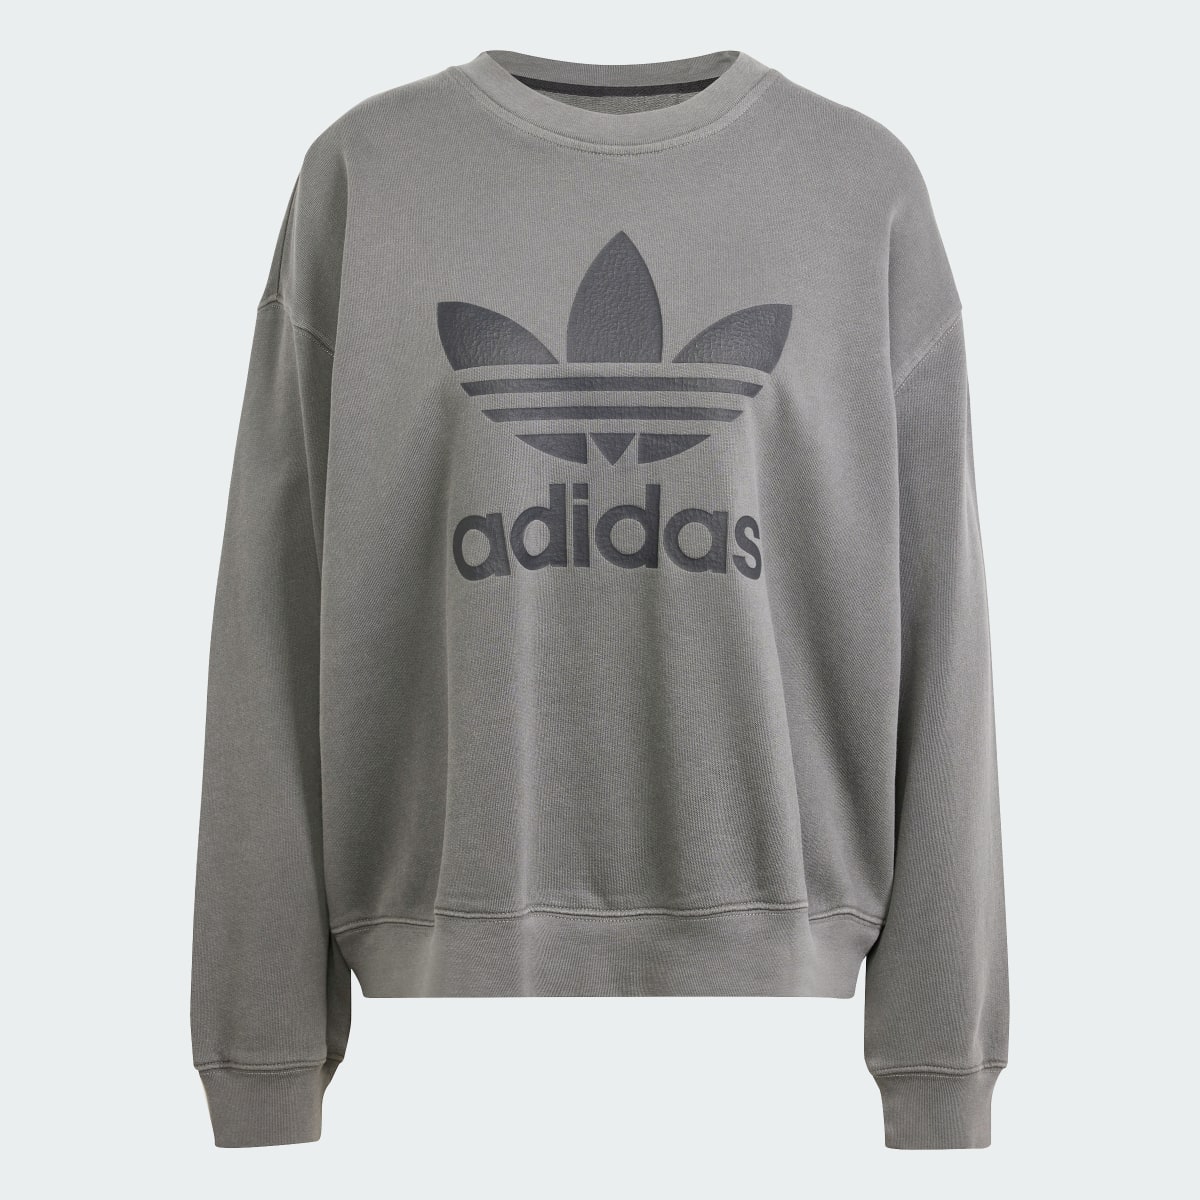 Adidas Washed Trefoil Sweatshirt. 5